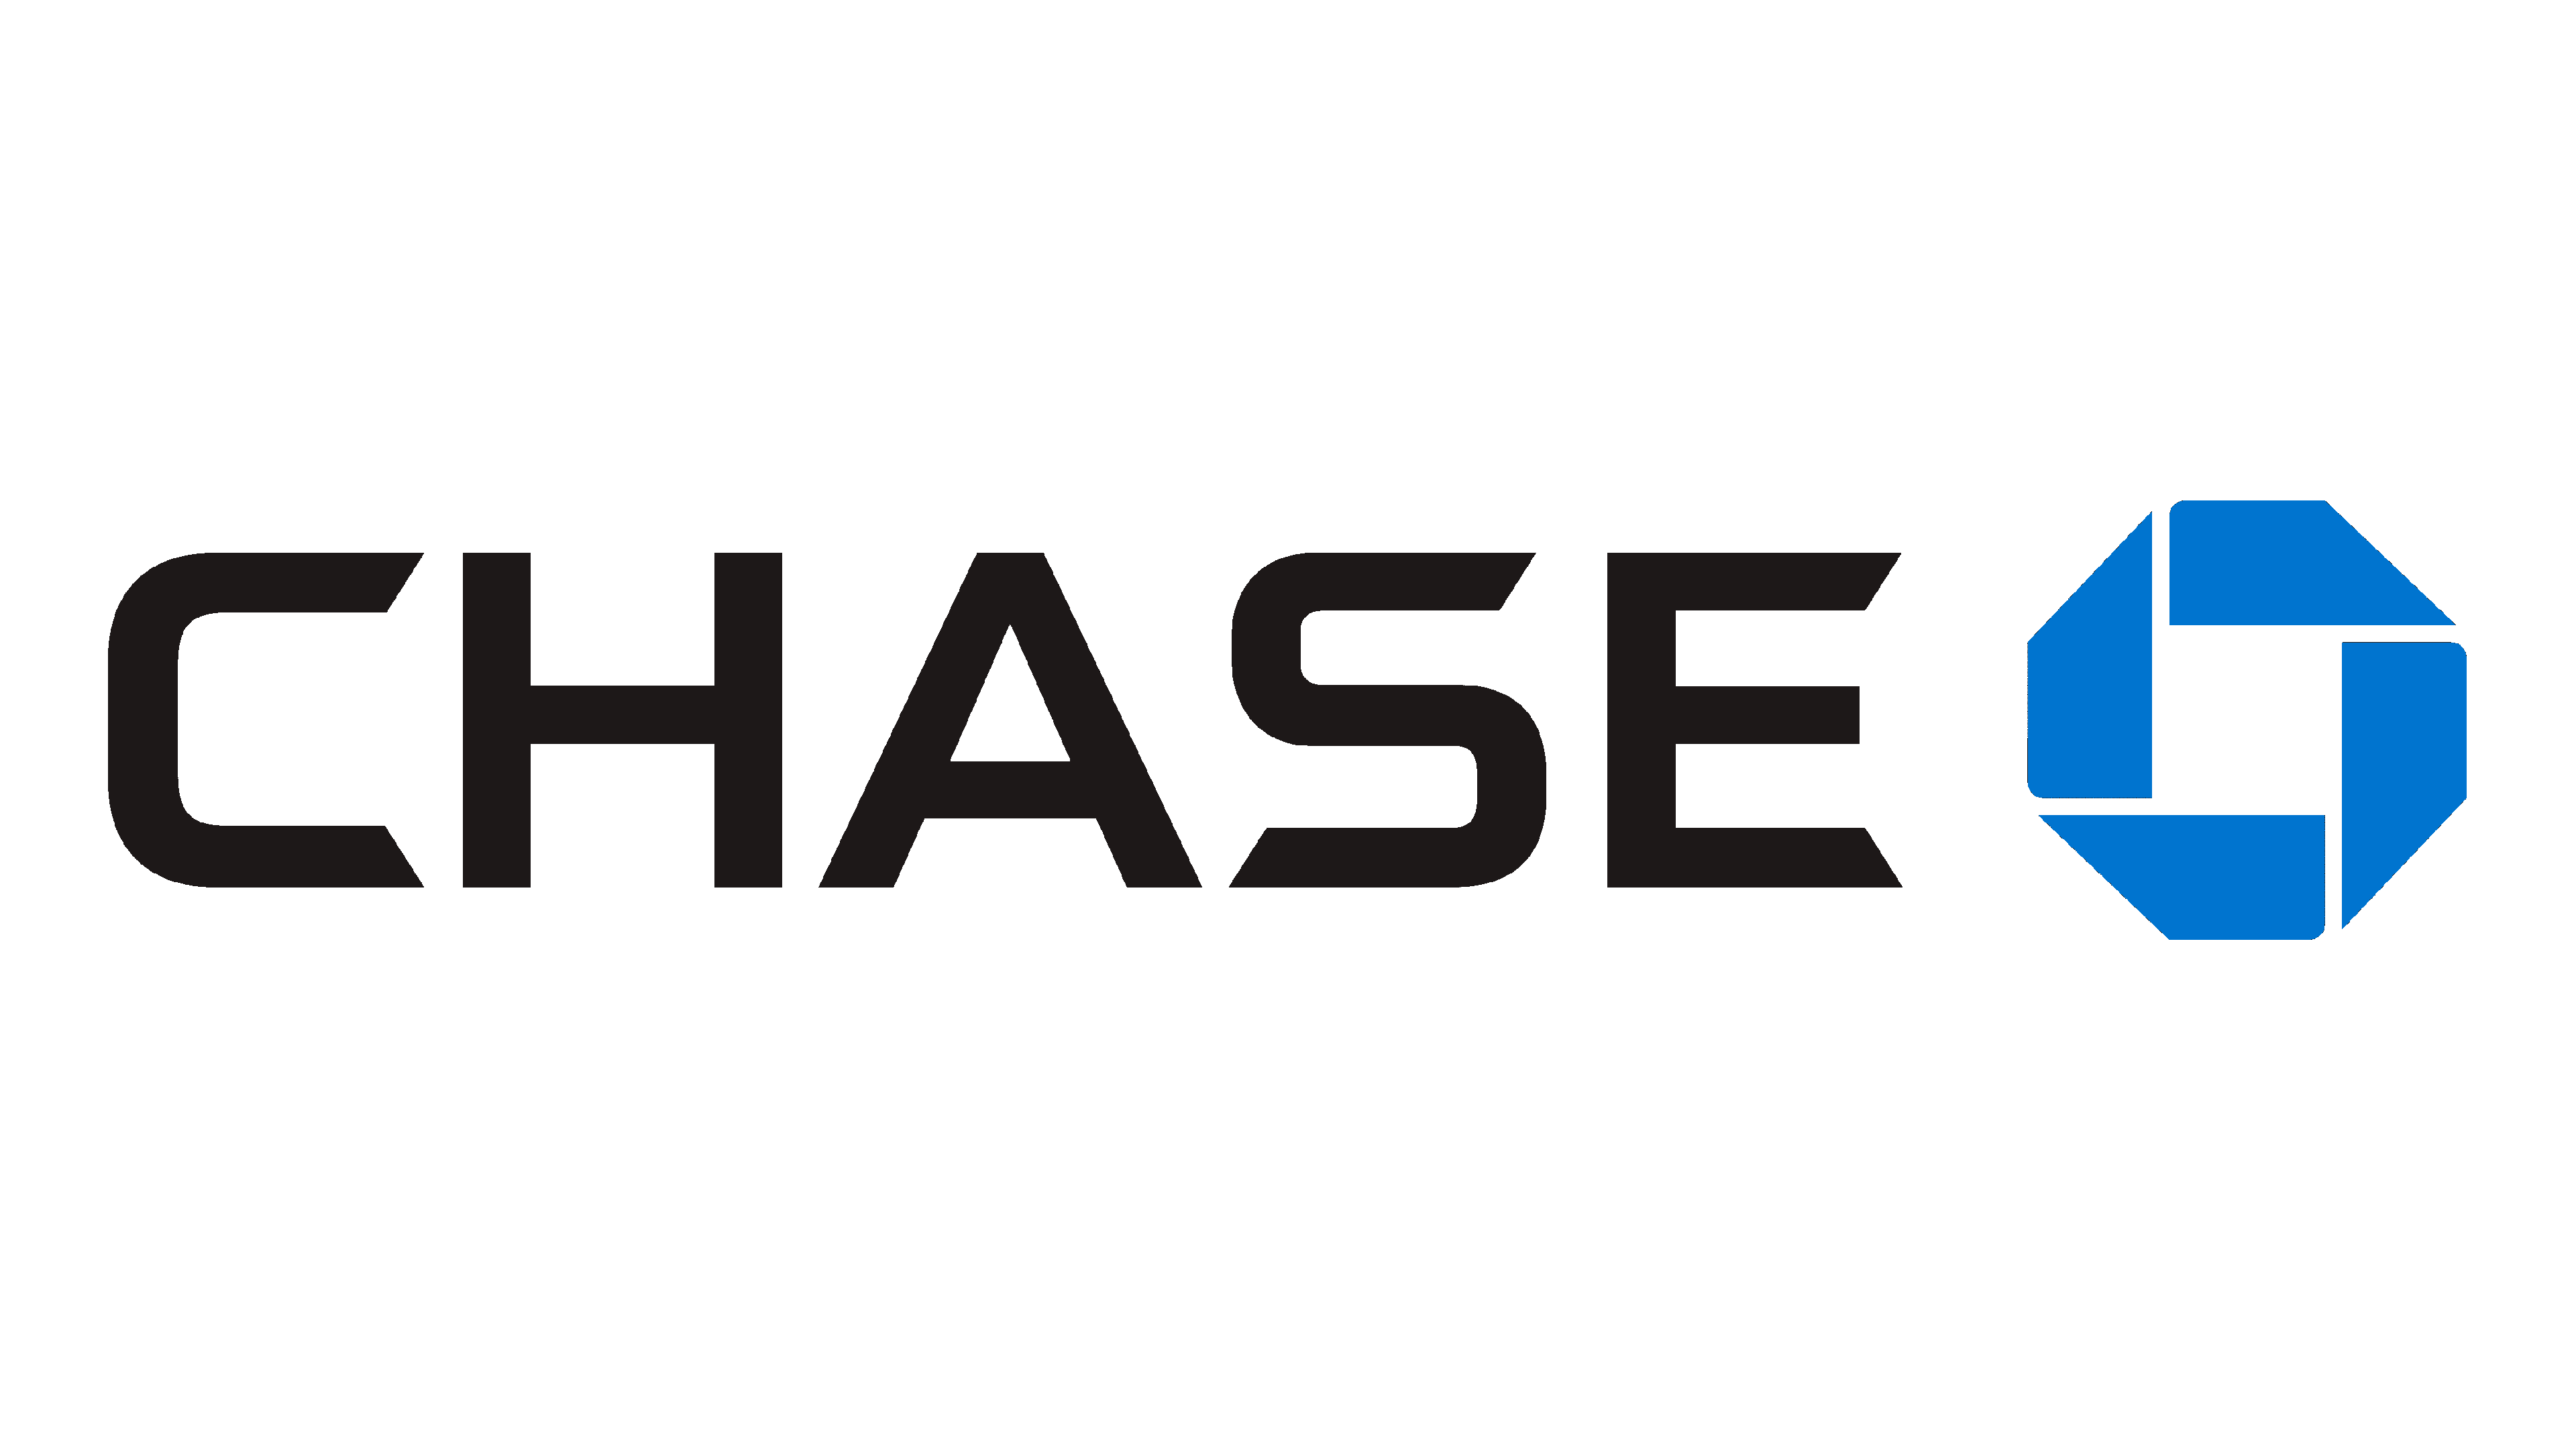 Chase Logo Logo